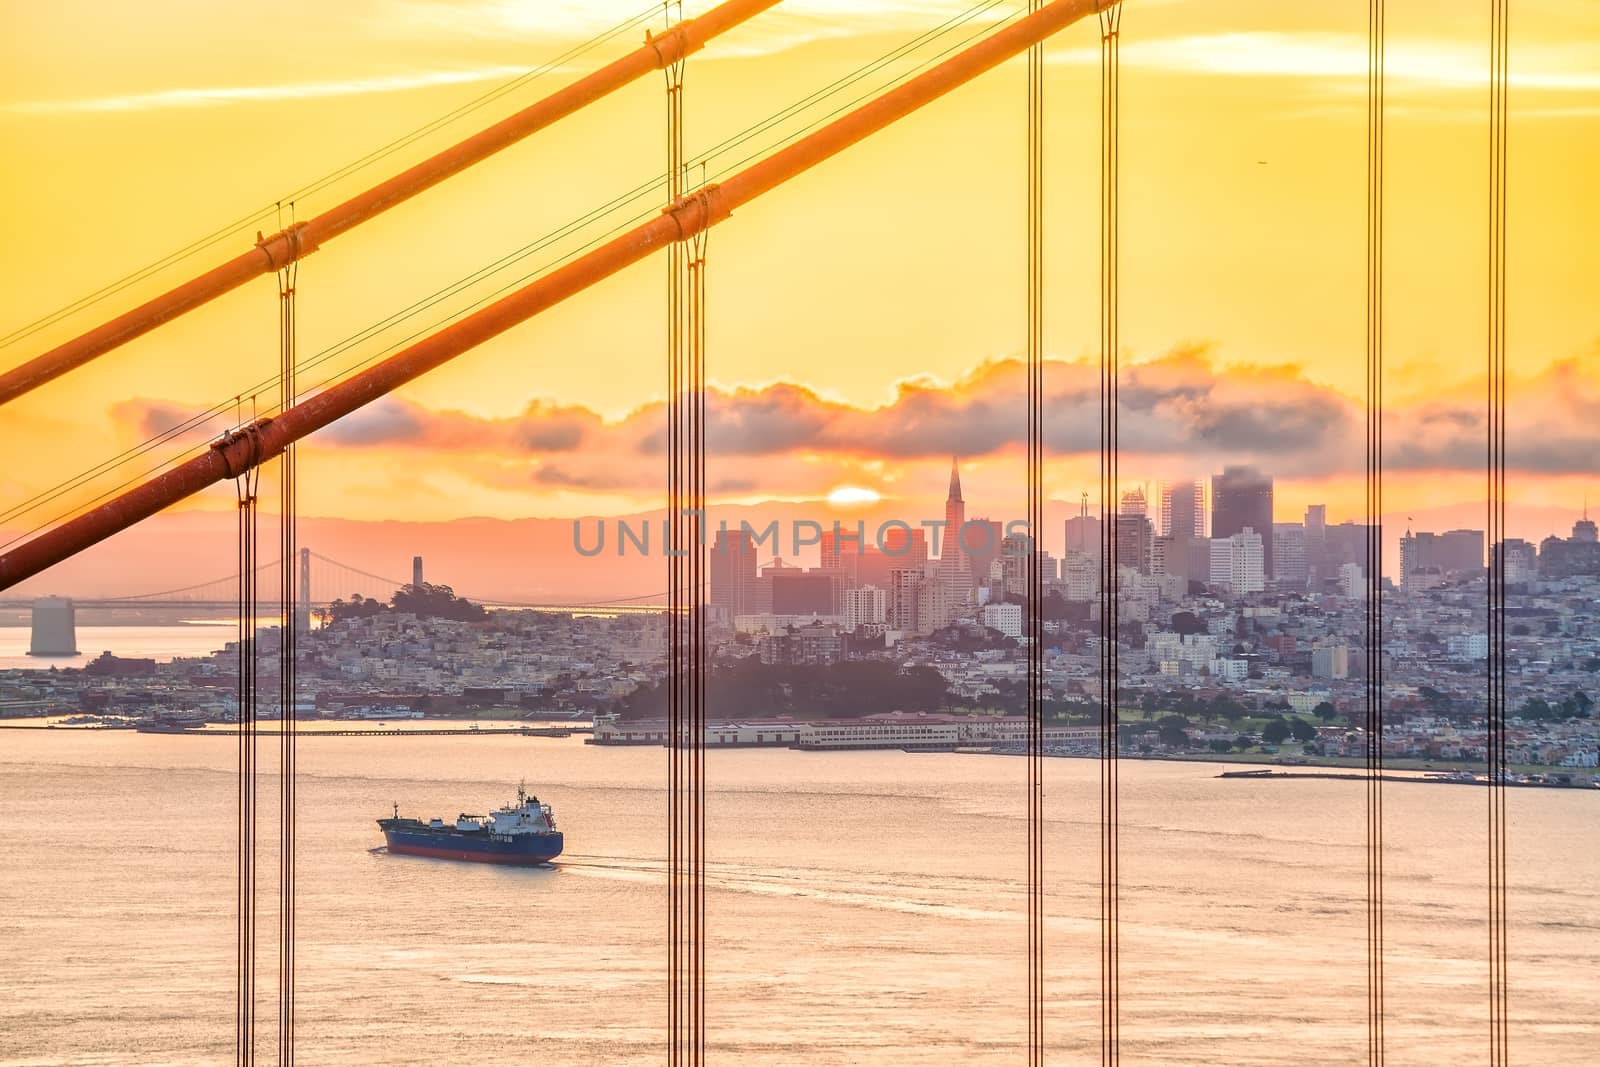 Famous Golden Gate Bridge, San Francisco at sunset by f11photo